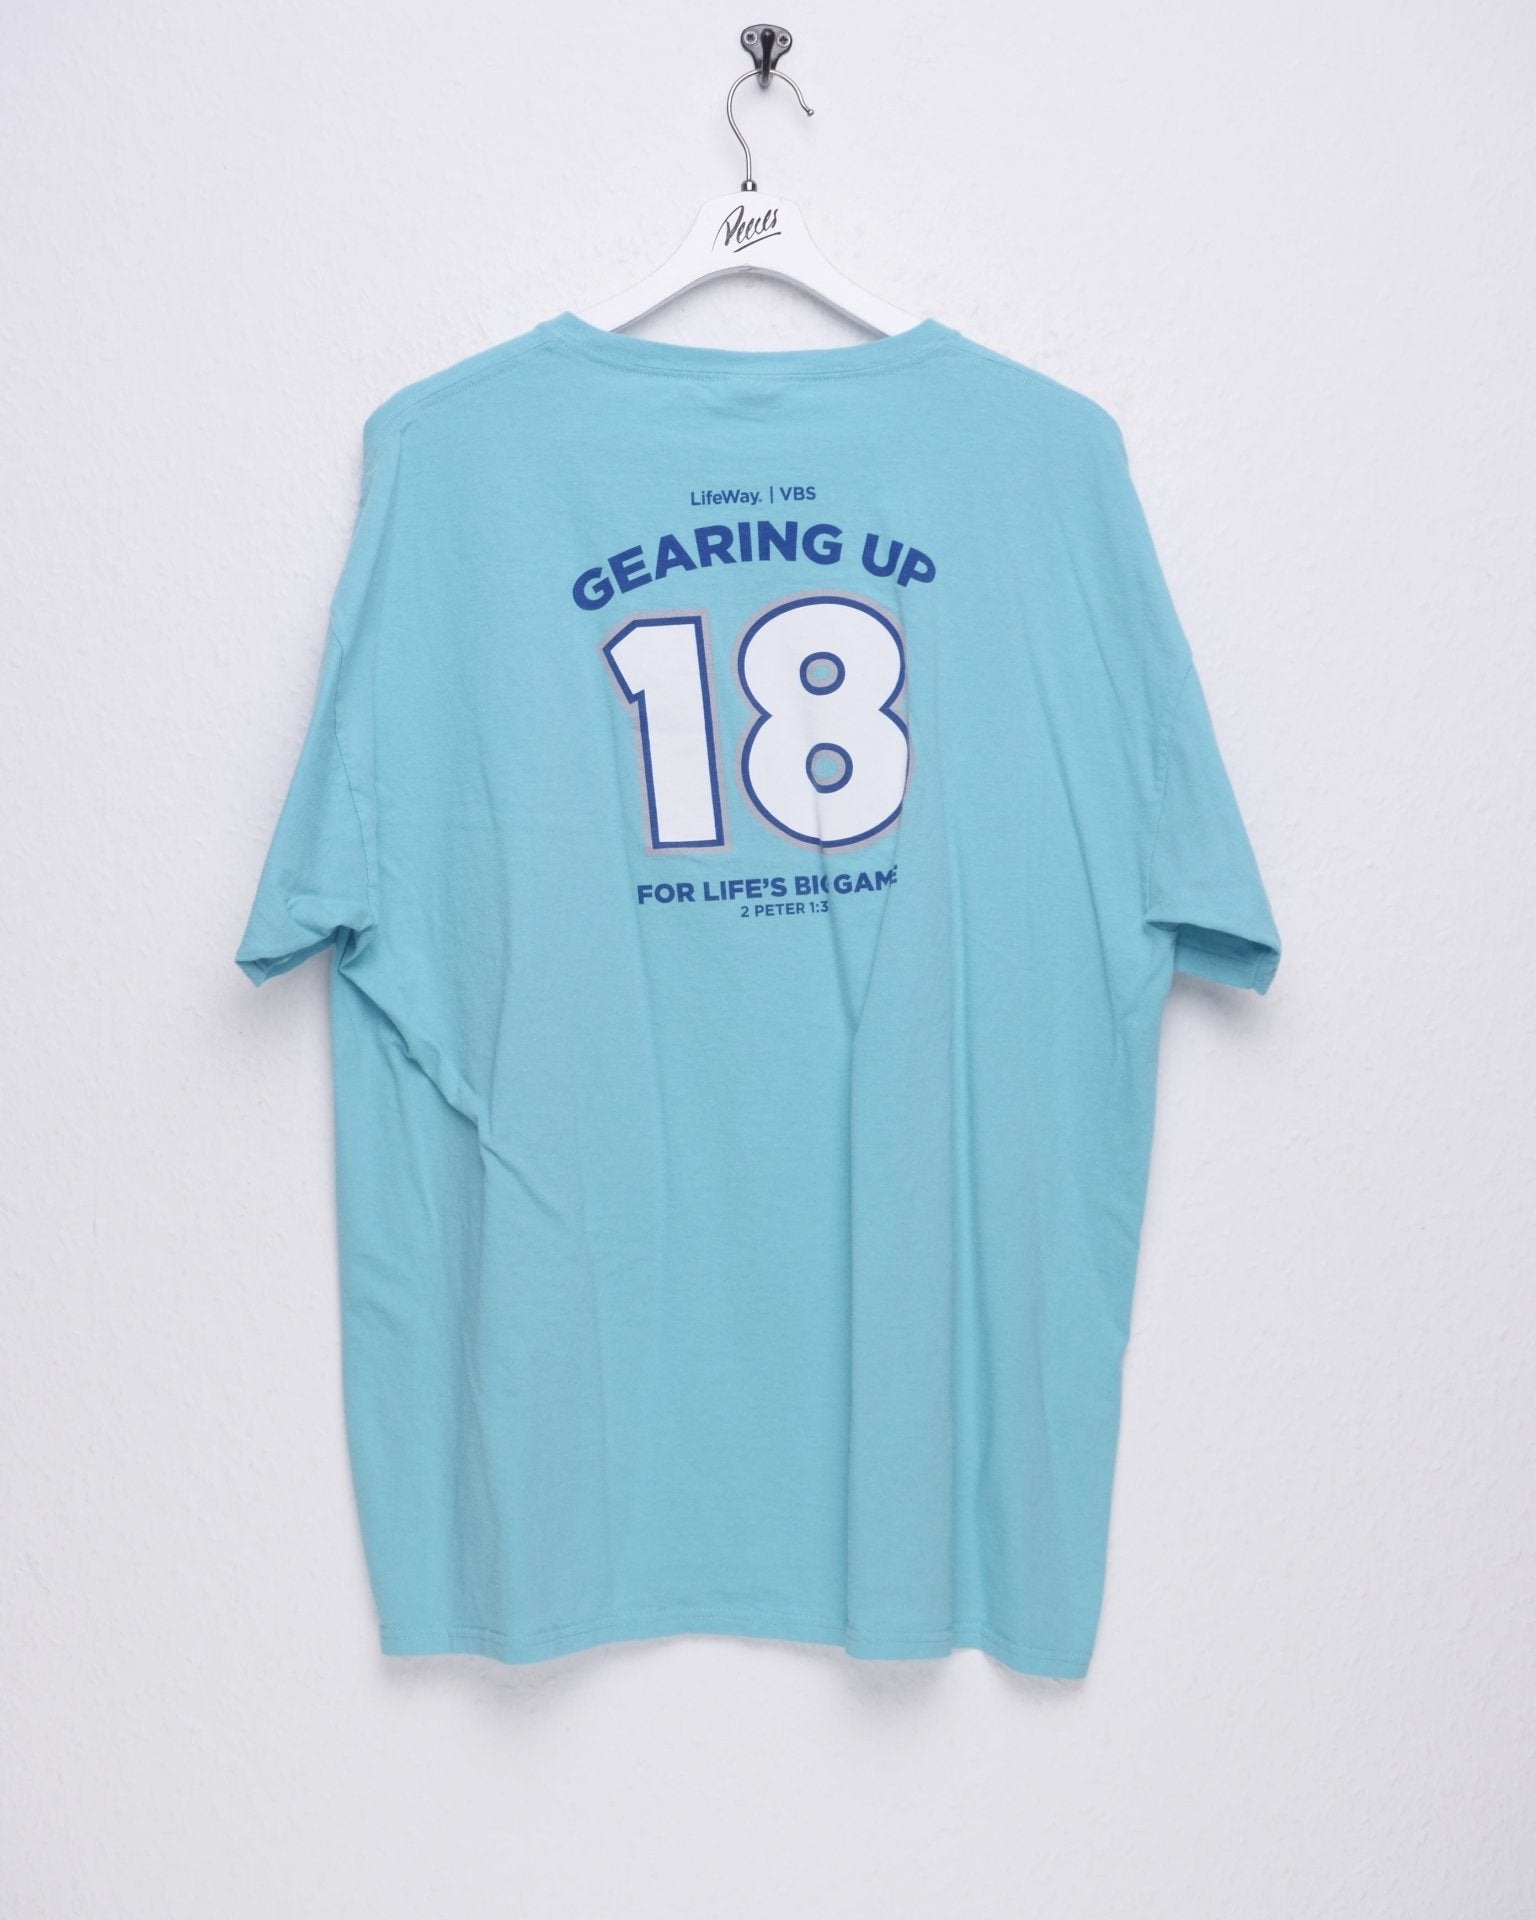 printed 'Game on' Logo turquoise oversized Shirt - Peeces